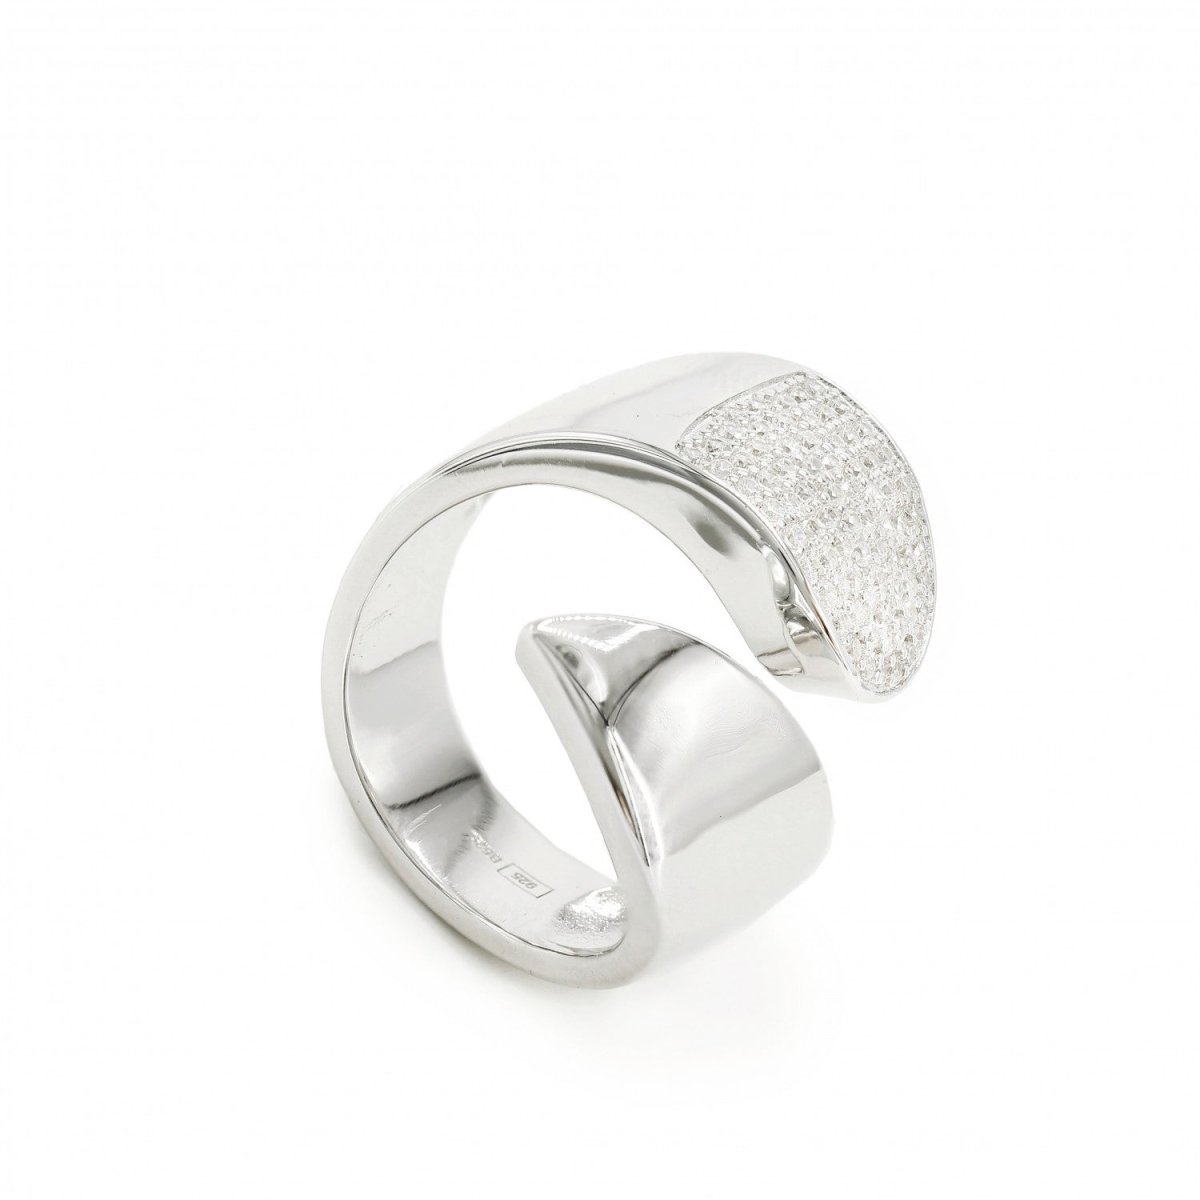 Ring - Large rings irregular open design with zirconias